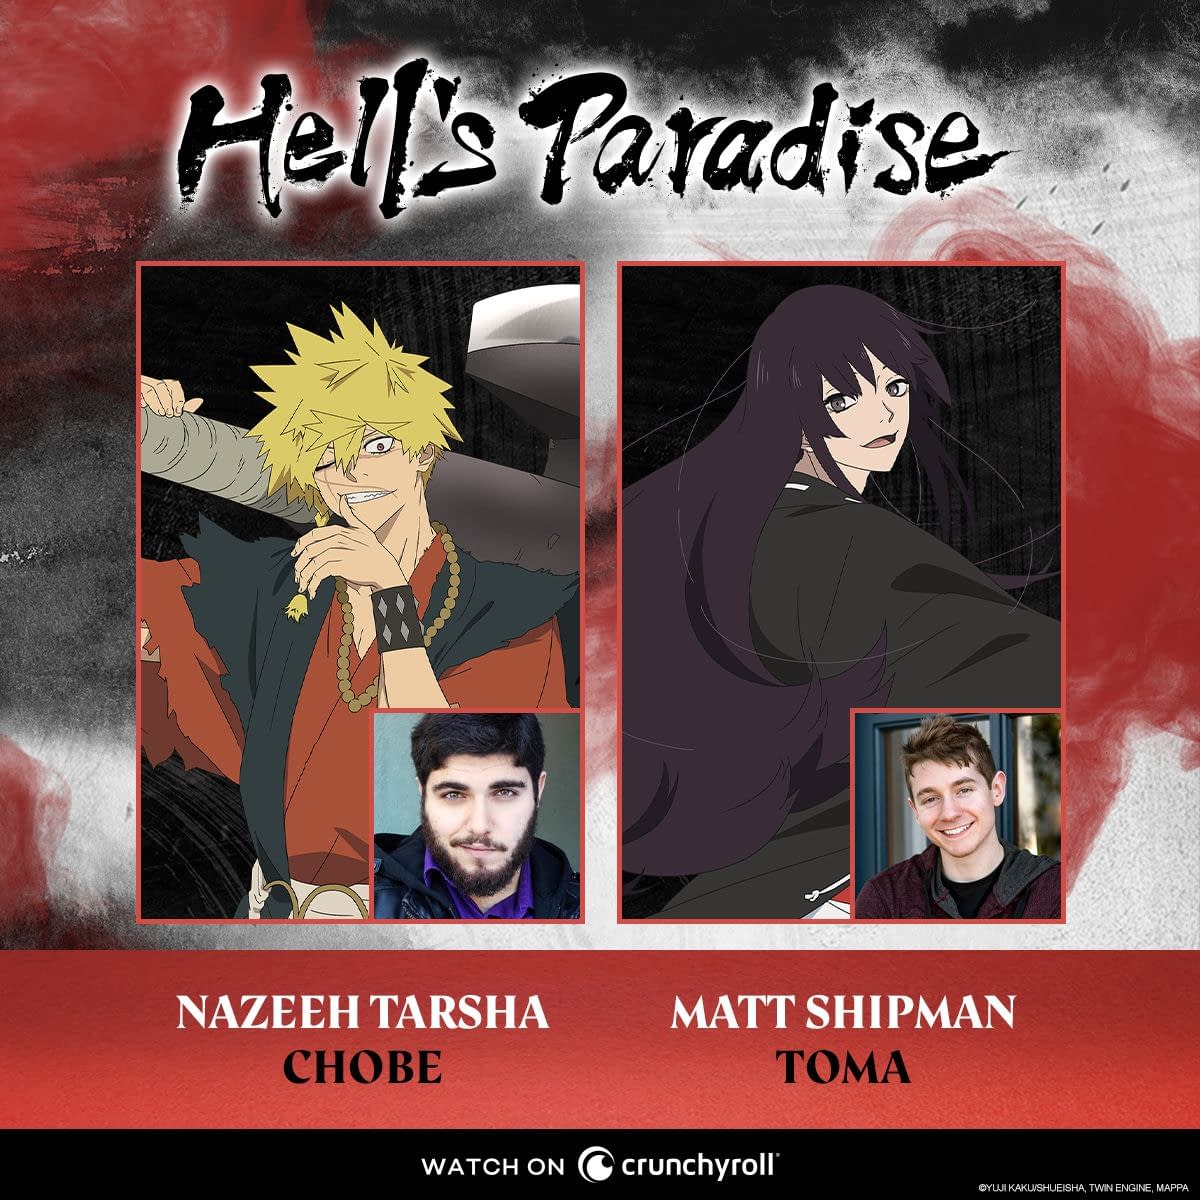 Hell's Paradise (English Dub) Screening and Choosing - Watch on Crunchyroll